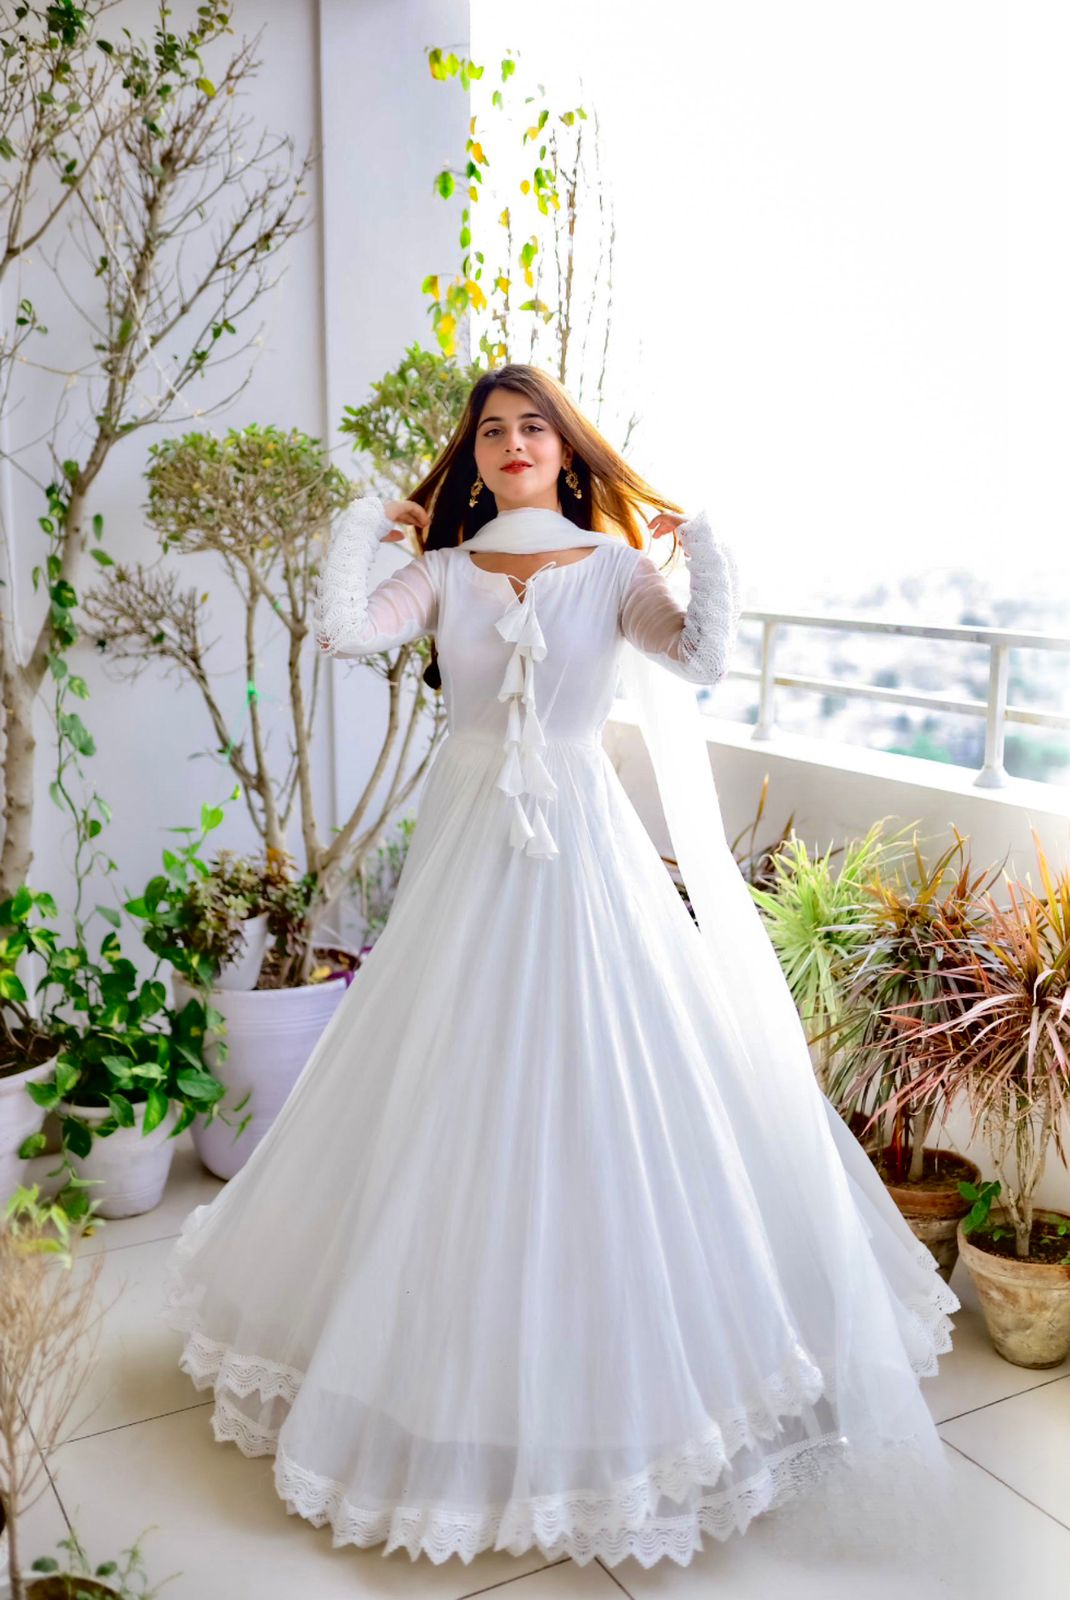 White Maxi Dress - Long Sleeve Dress - Mermaid Maxi Dress - Lulus